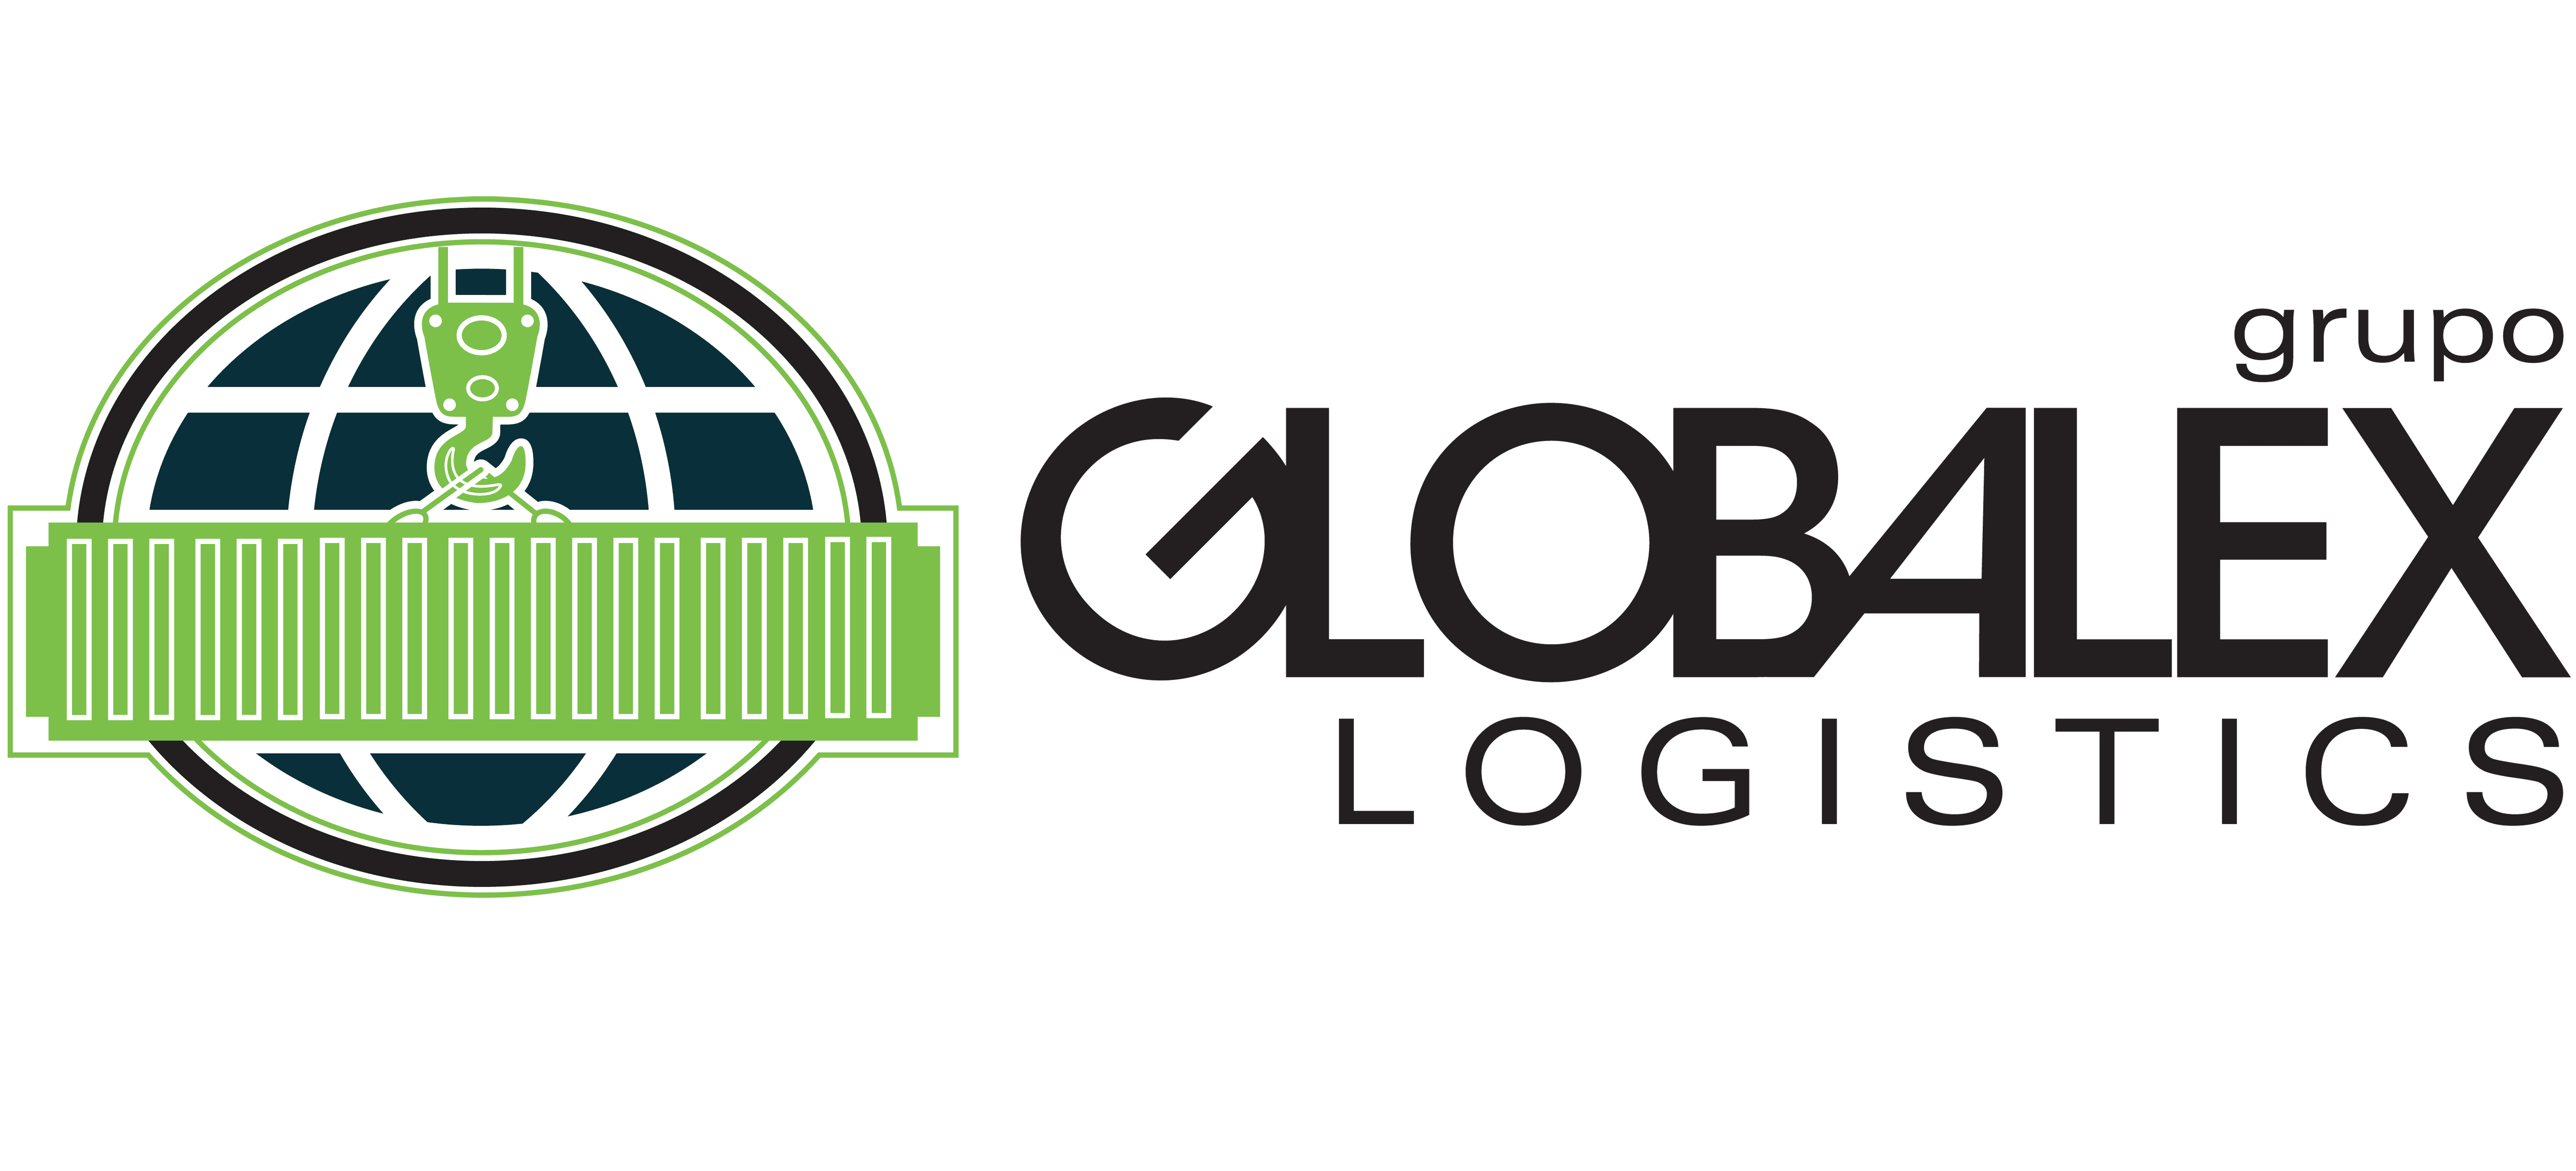 globalexlogistics